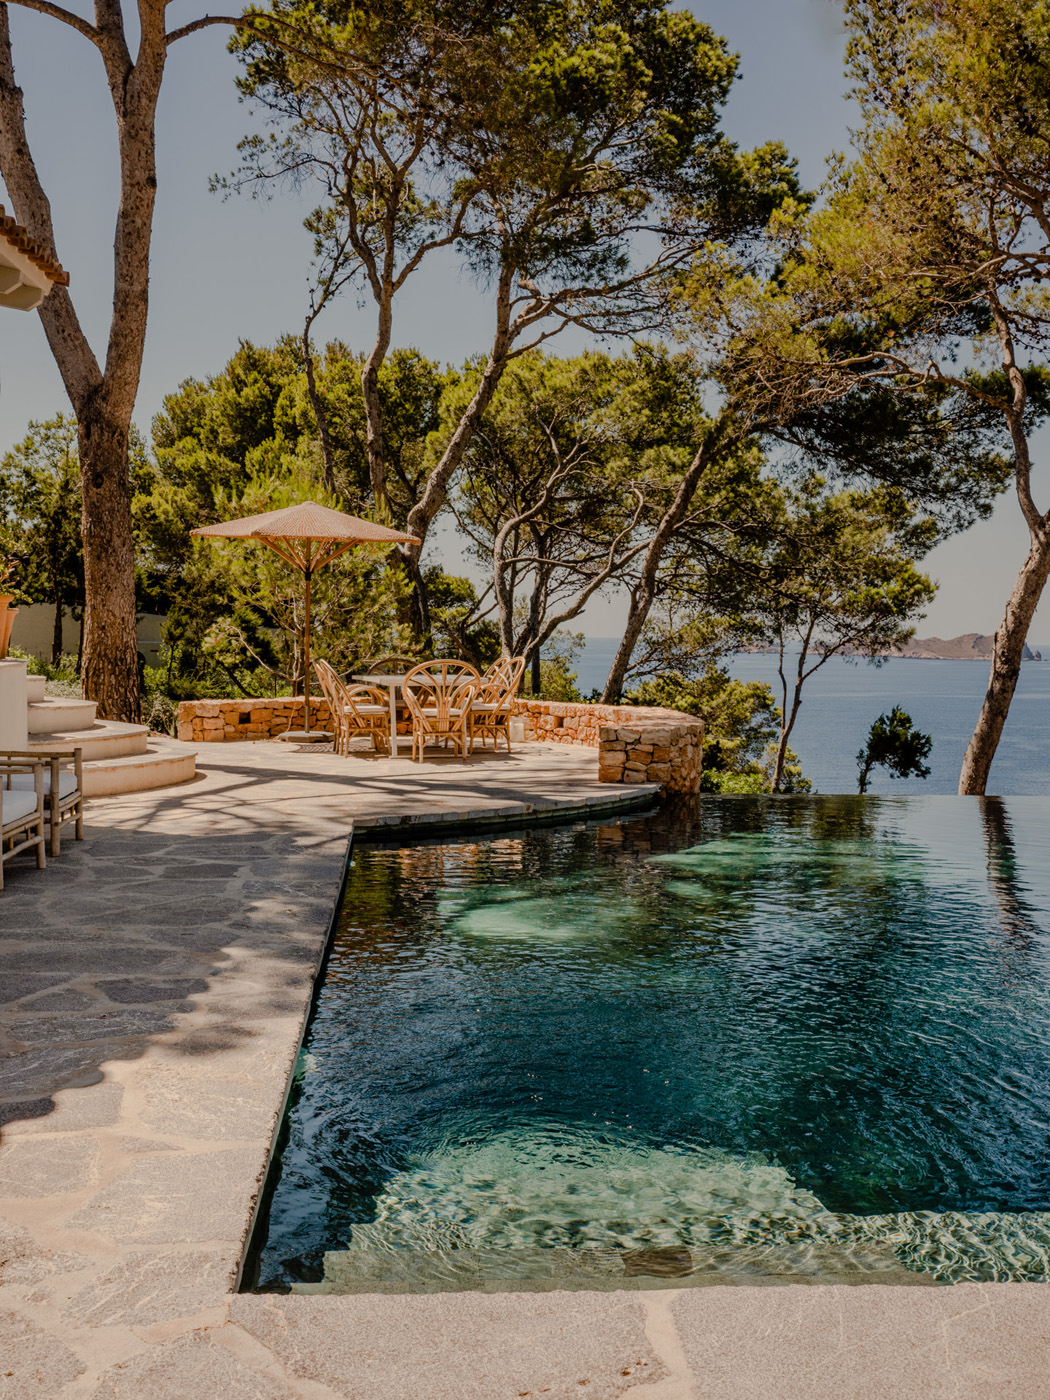 Pool of a luxury villa in Ibiza